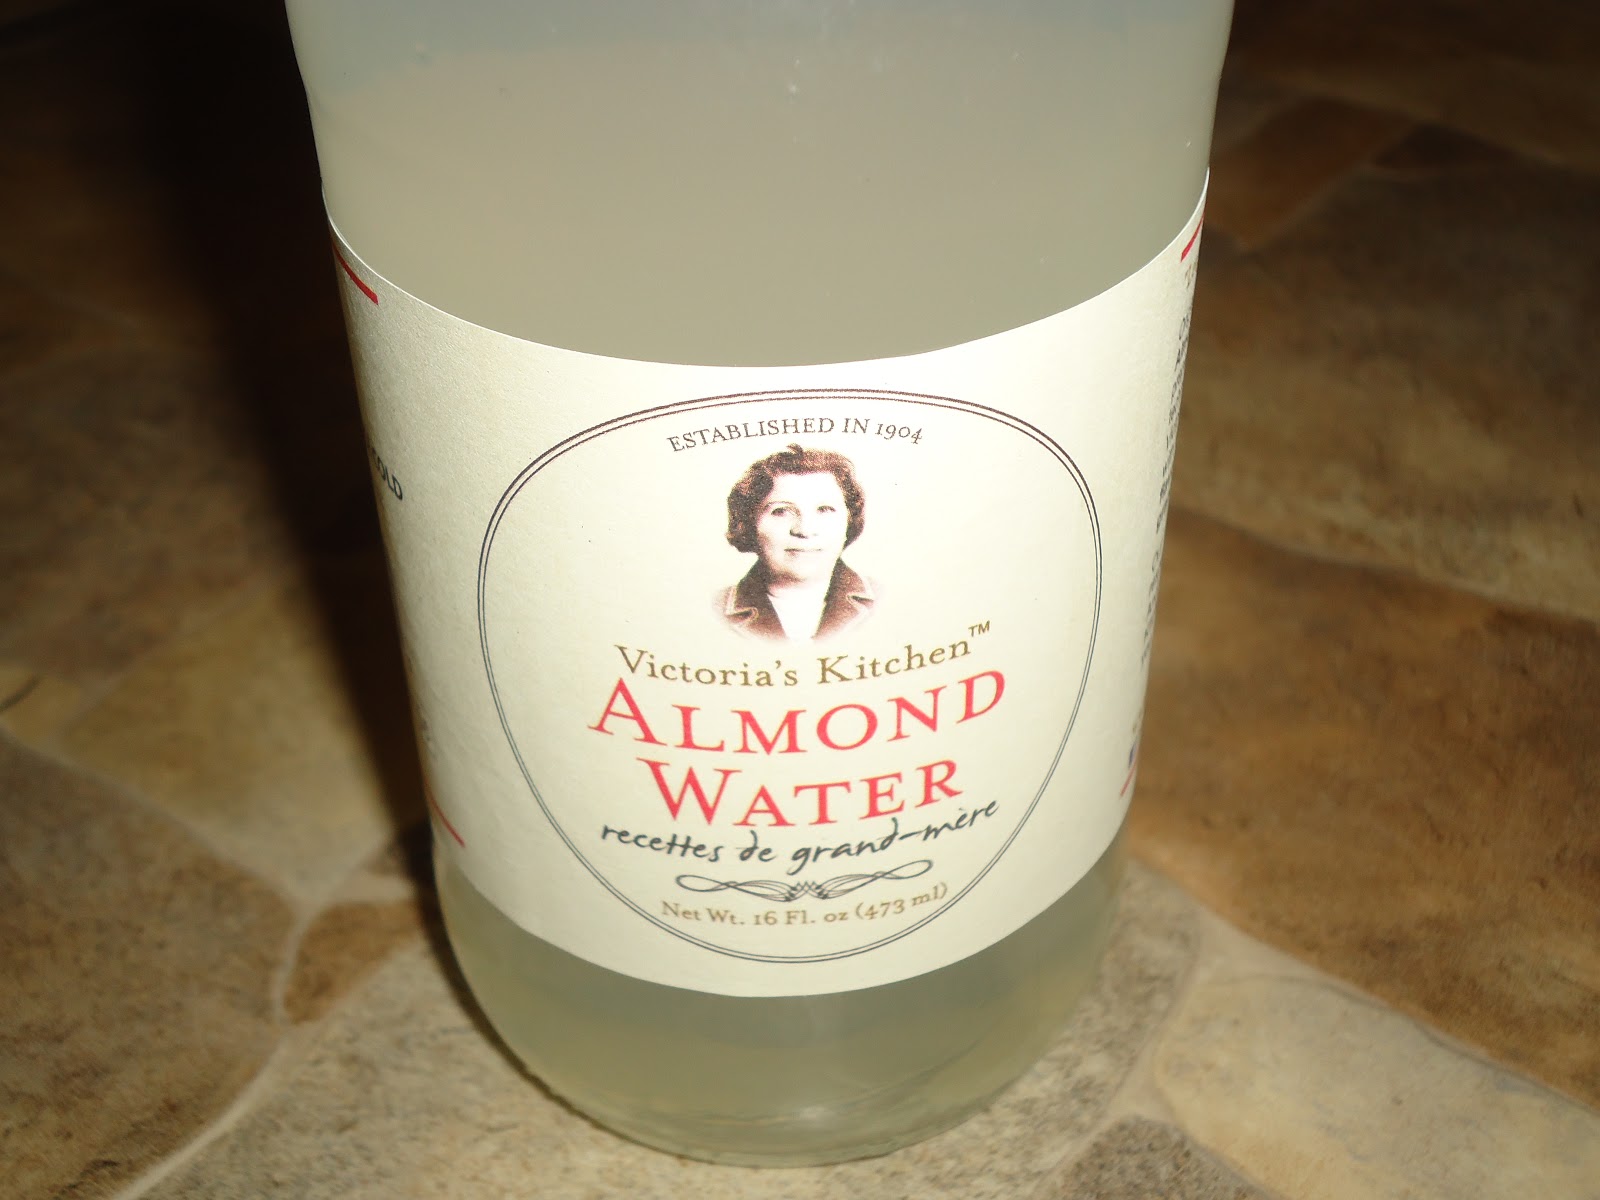 Fishful Thinking: Victoria's Kitchen Almond Water makes amazing Cherry